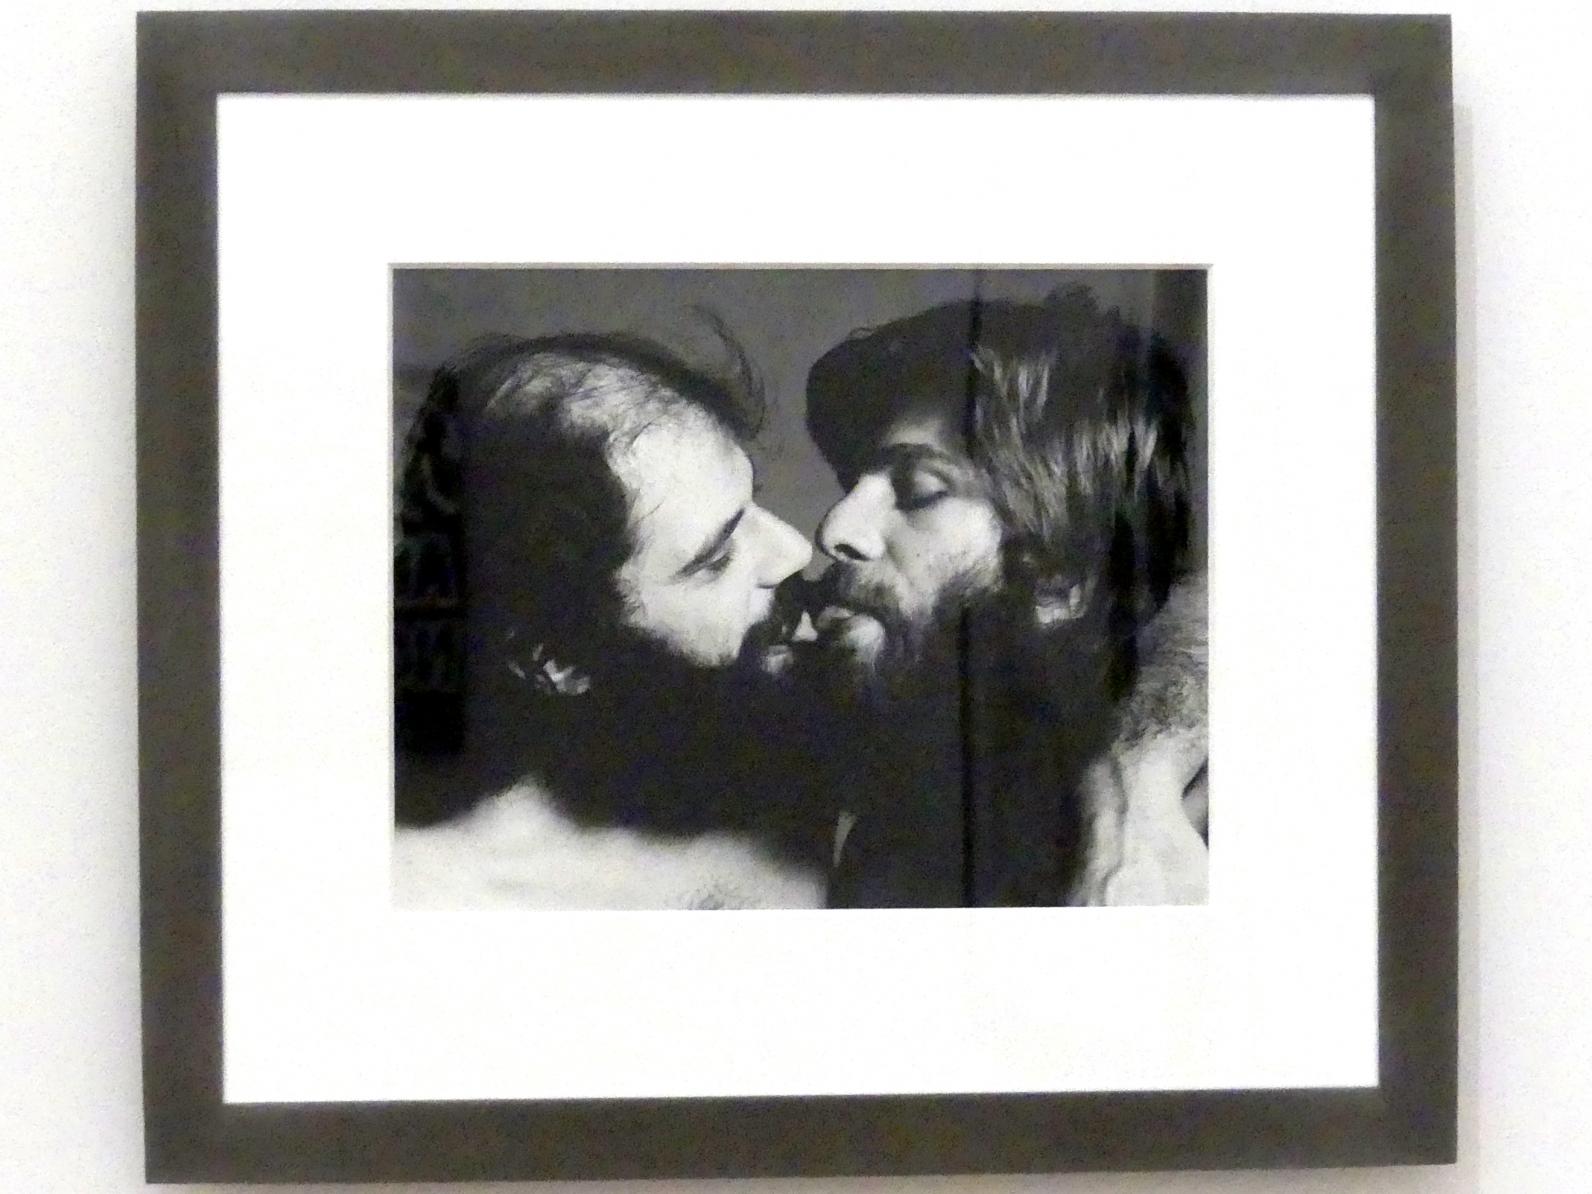 Richard Avedon (1993), Allen Ginsberg und Peter Orlovsky, Dichter, New York, 30. Dezember 1963, München, Museum Brandhorst, Saal 0.3, Undatiert